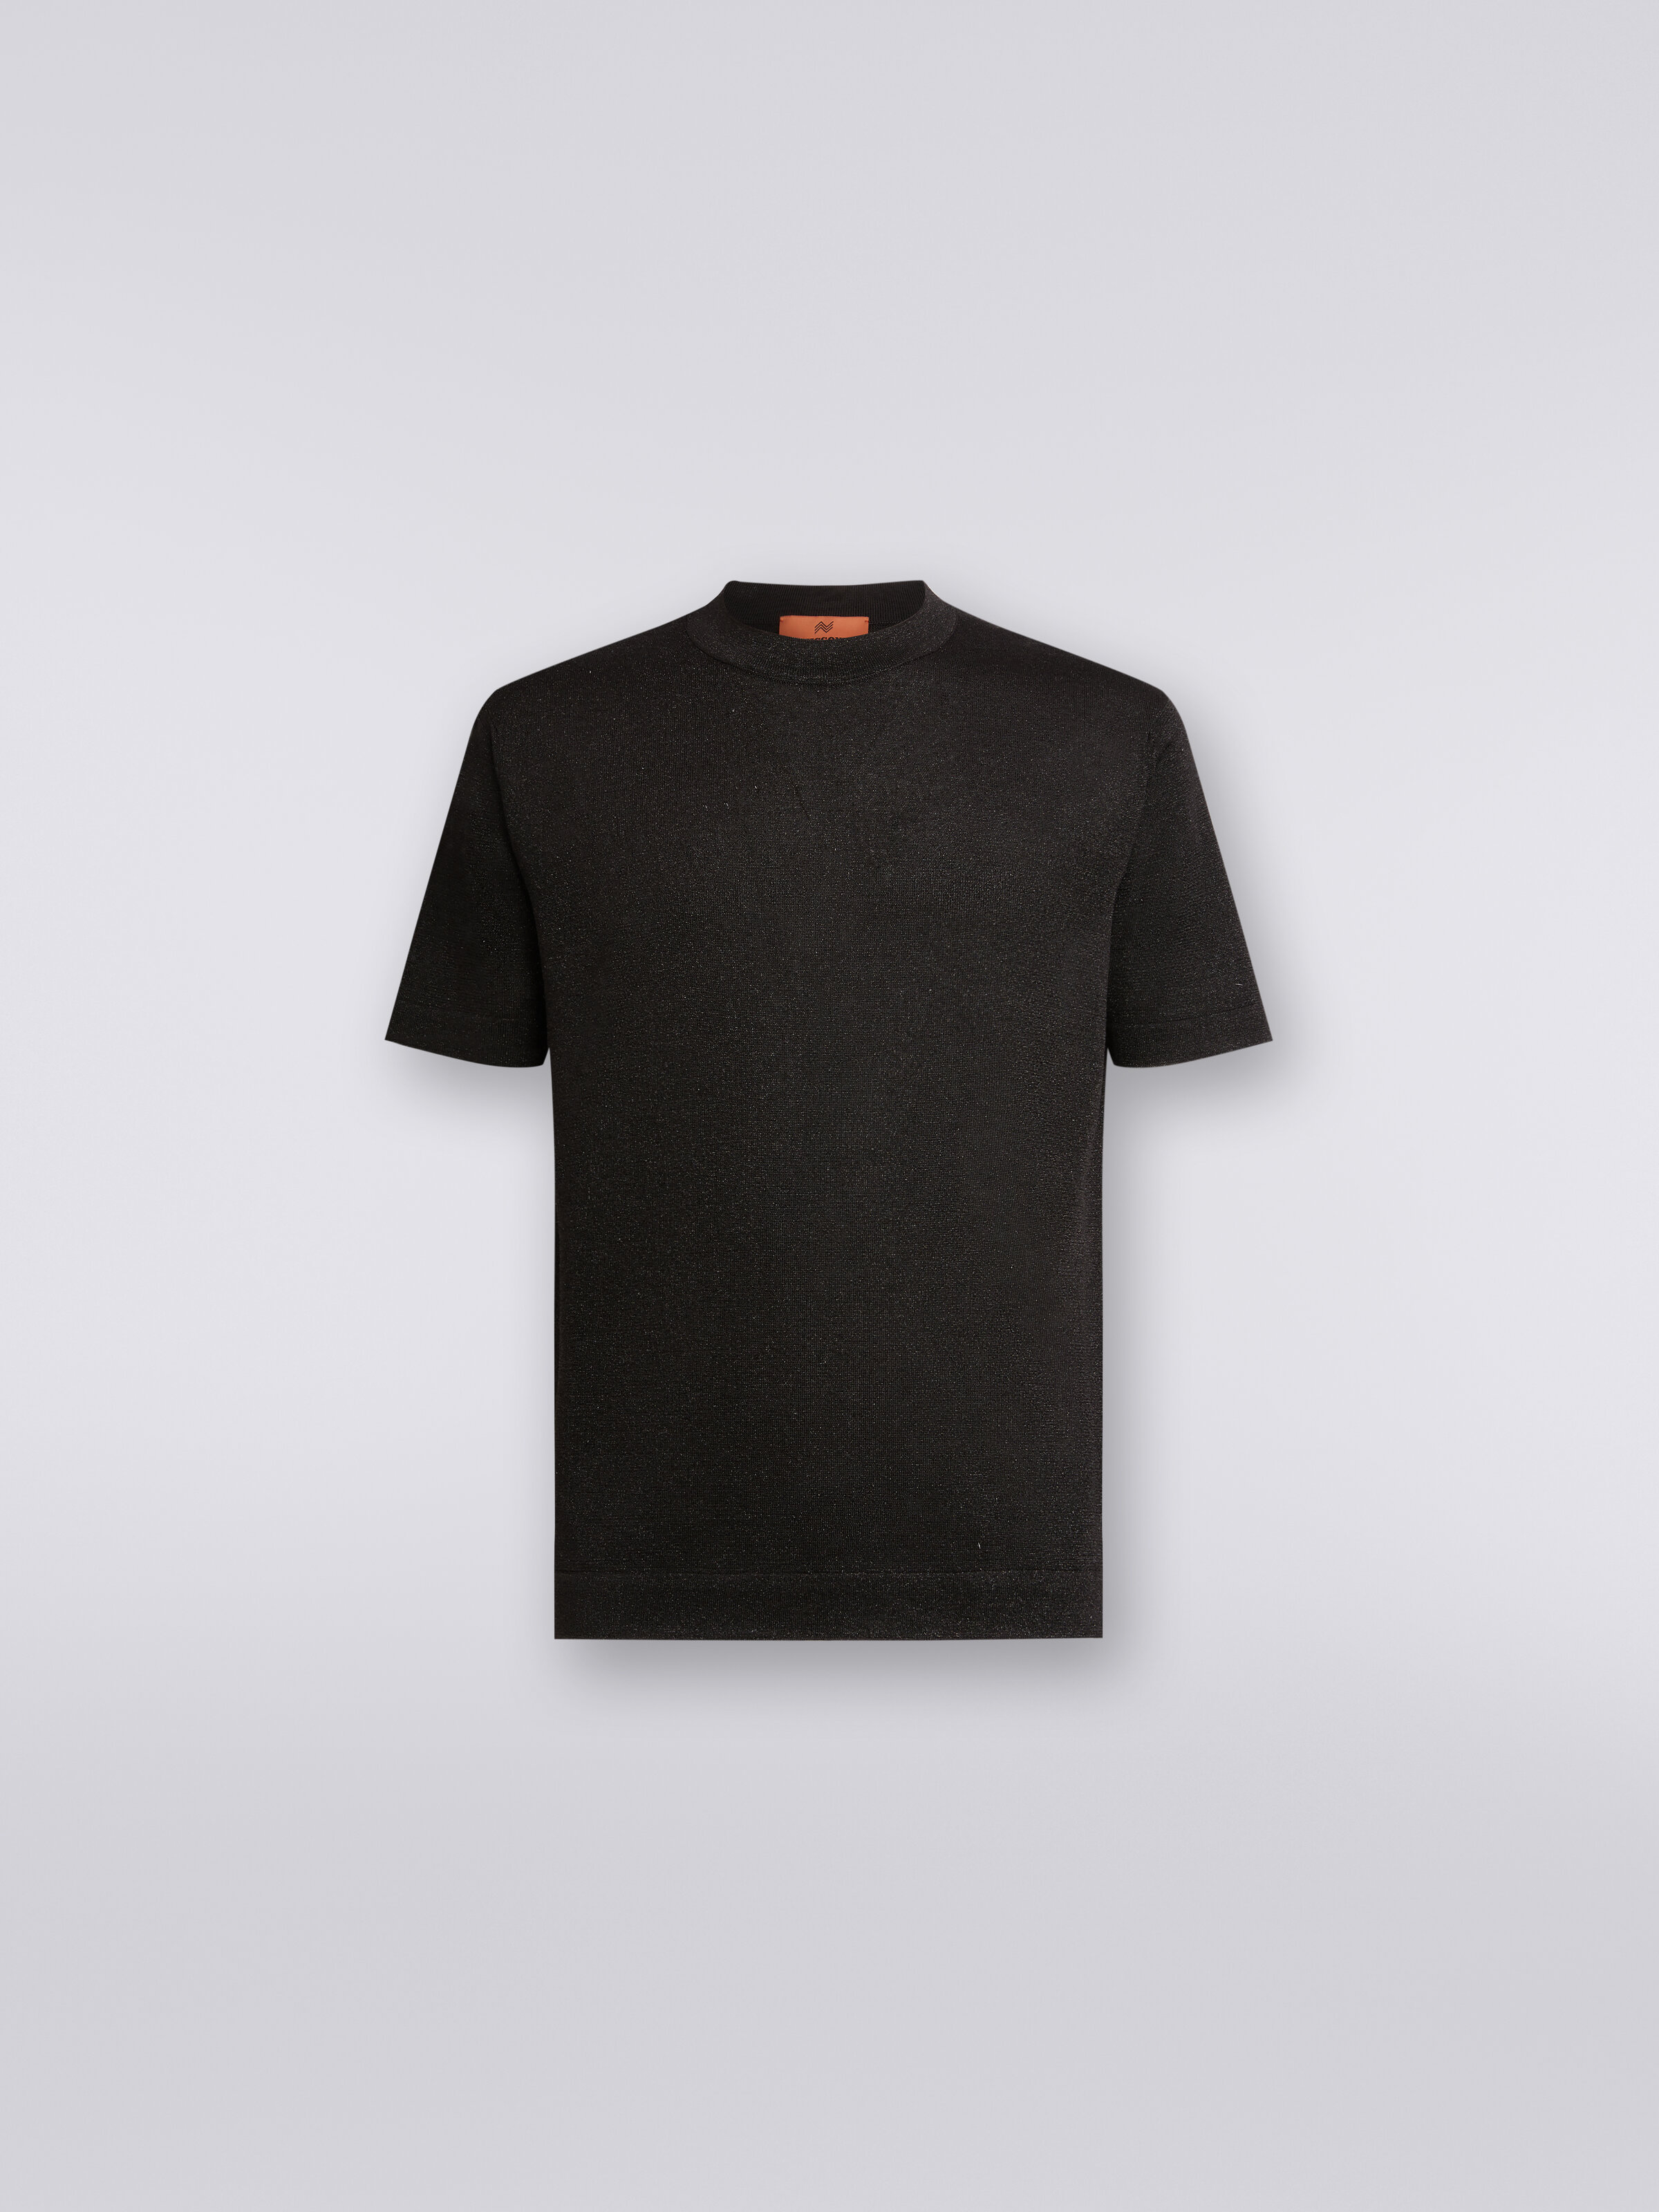 T-shirt in viscose blend with lurex, Black    - 0